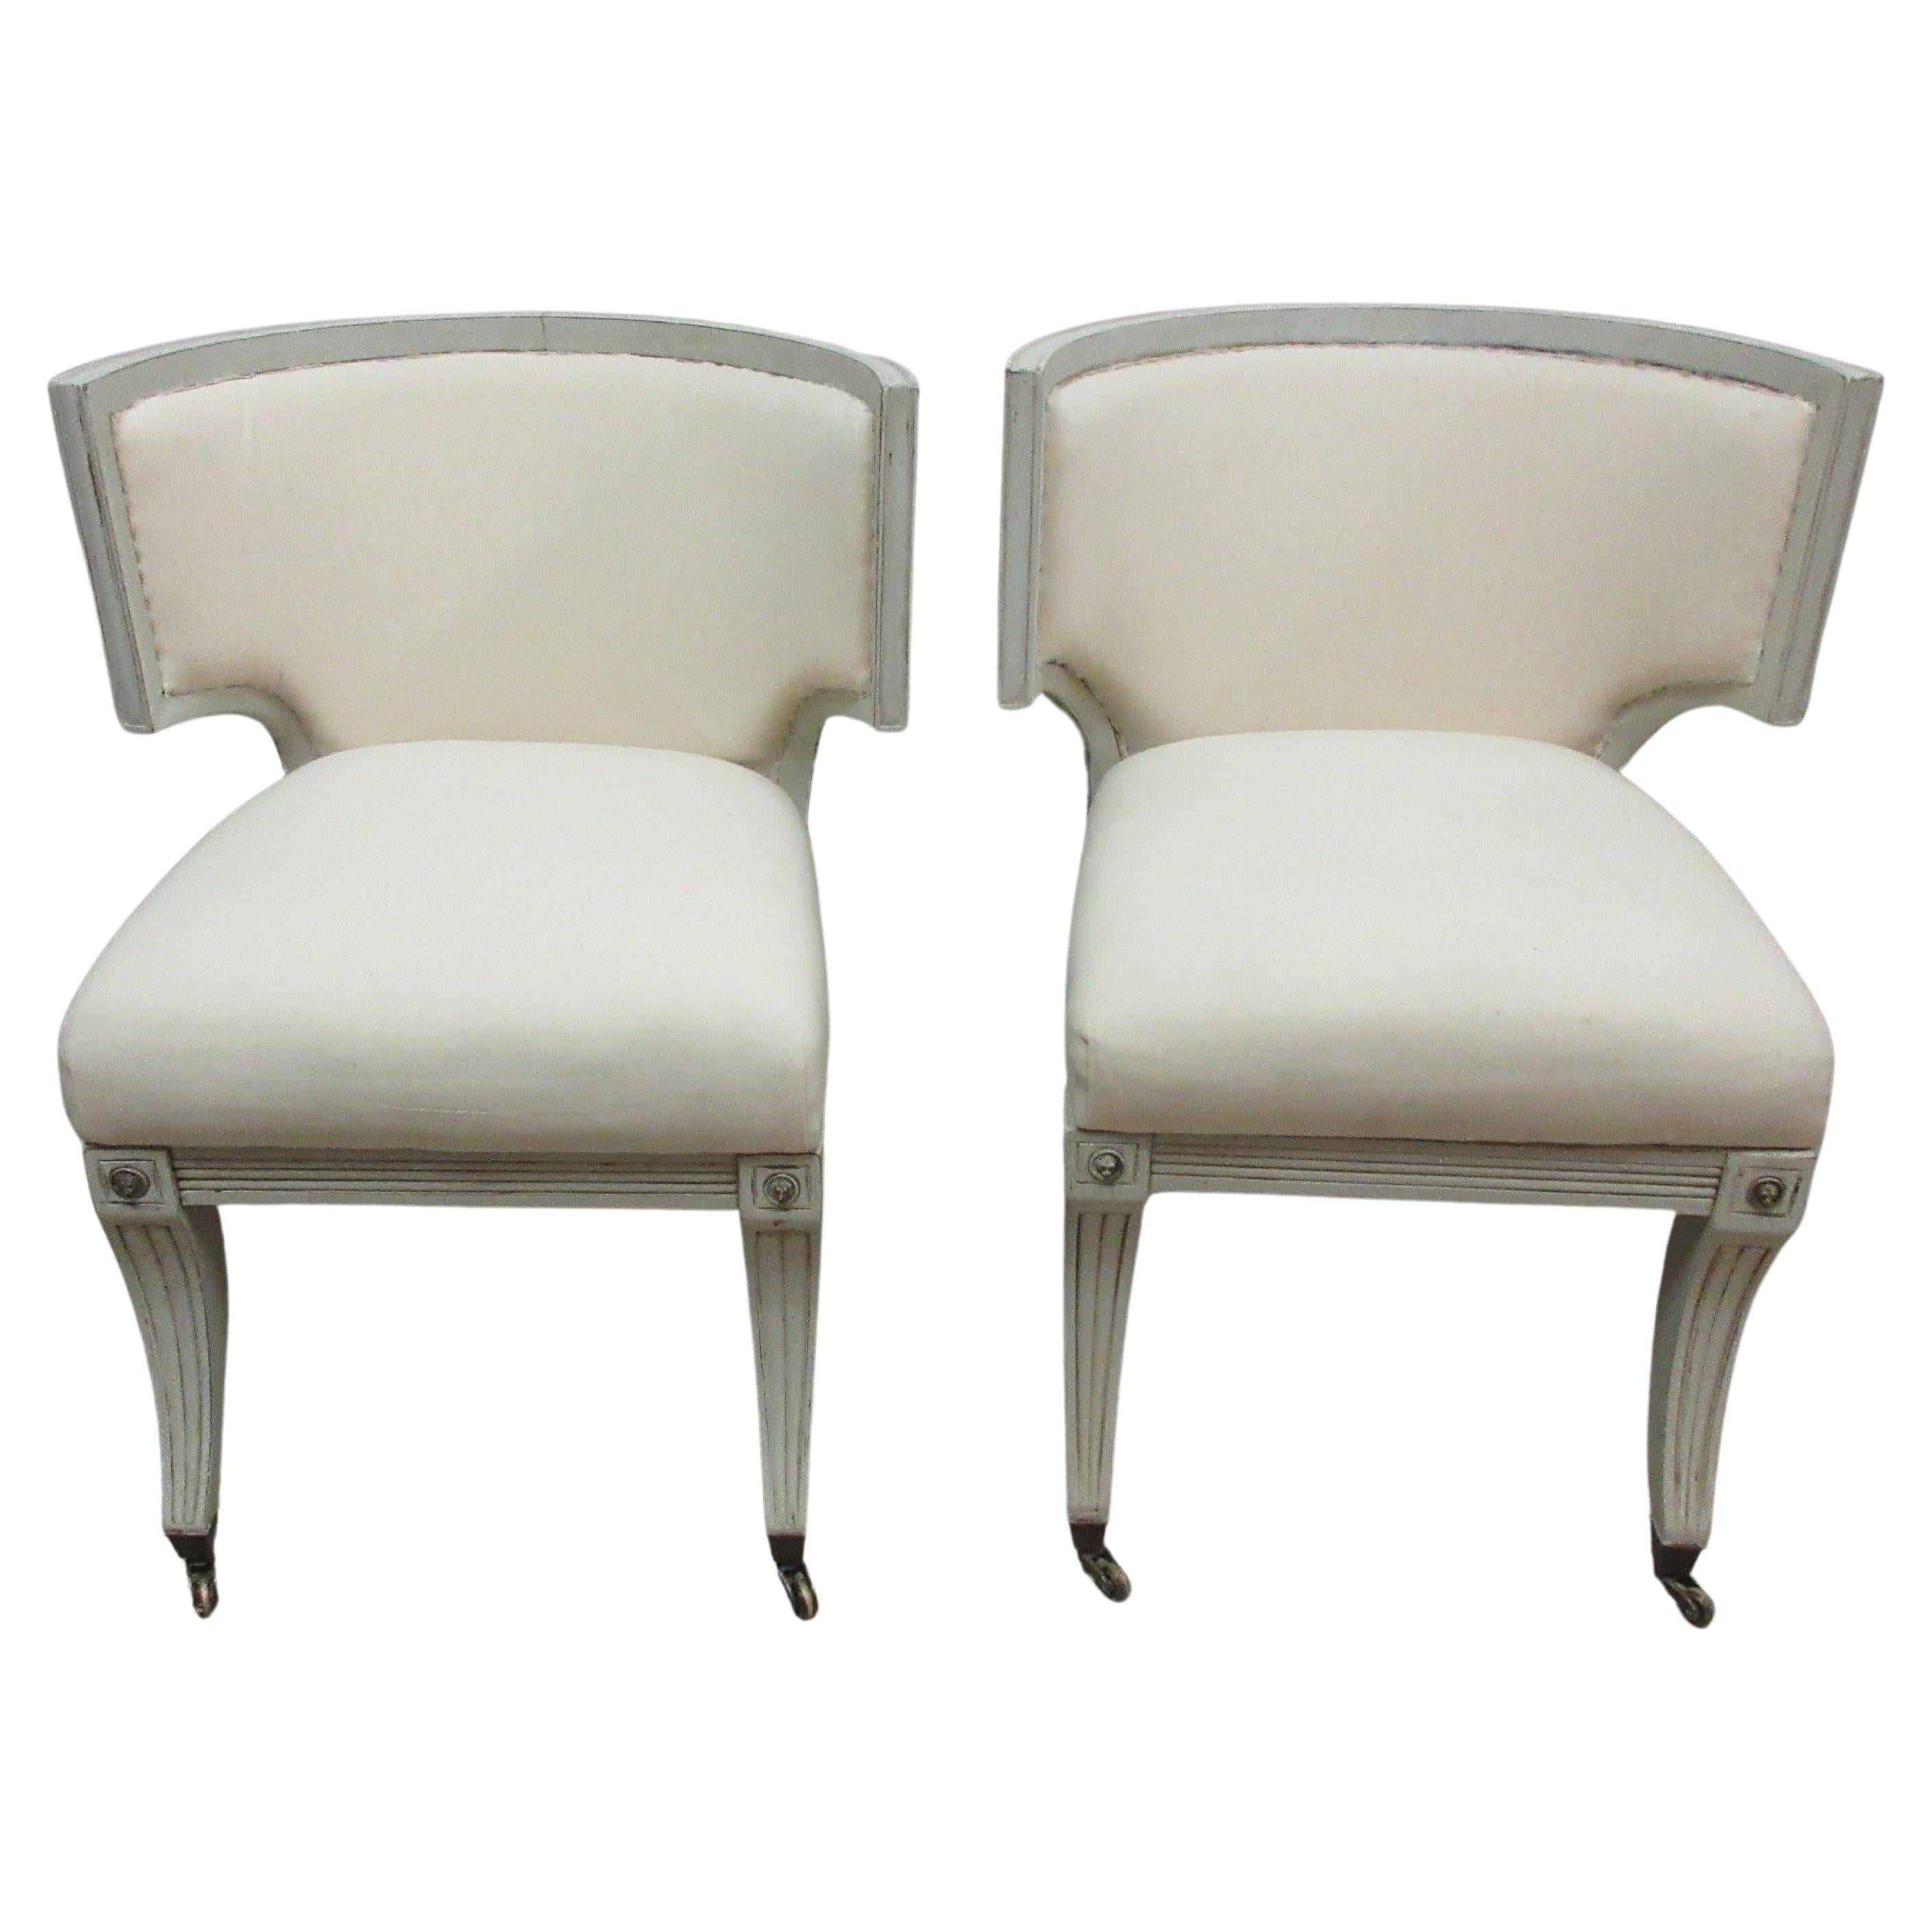 2 Swedish Klismos Style Chairs